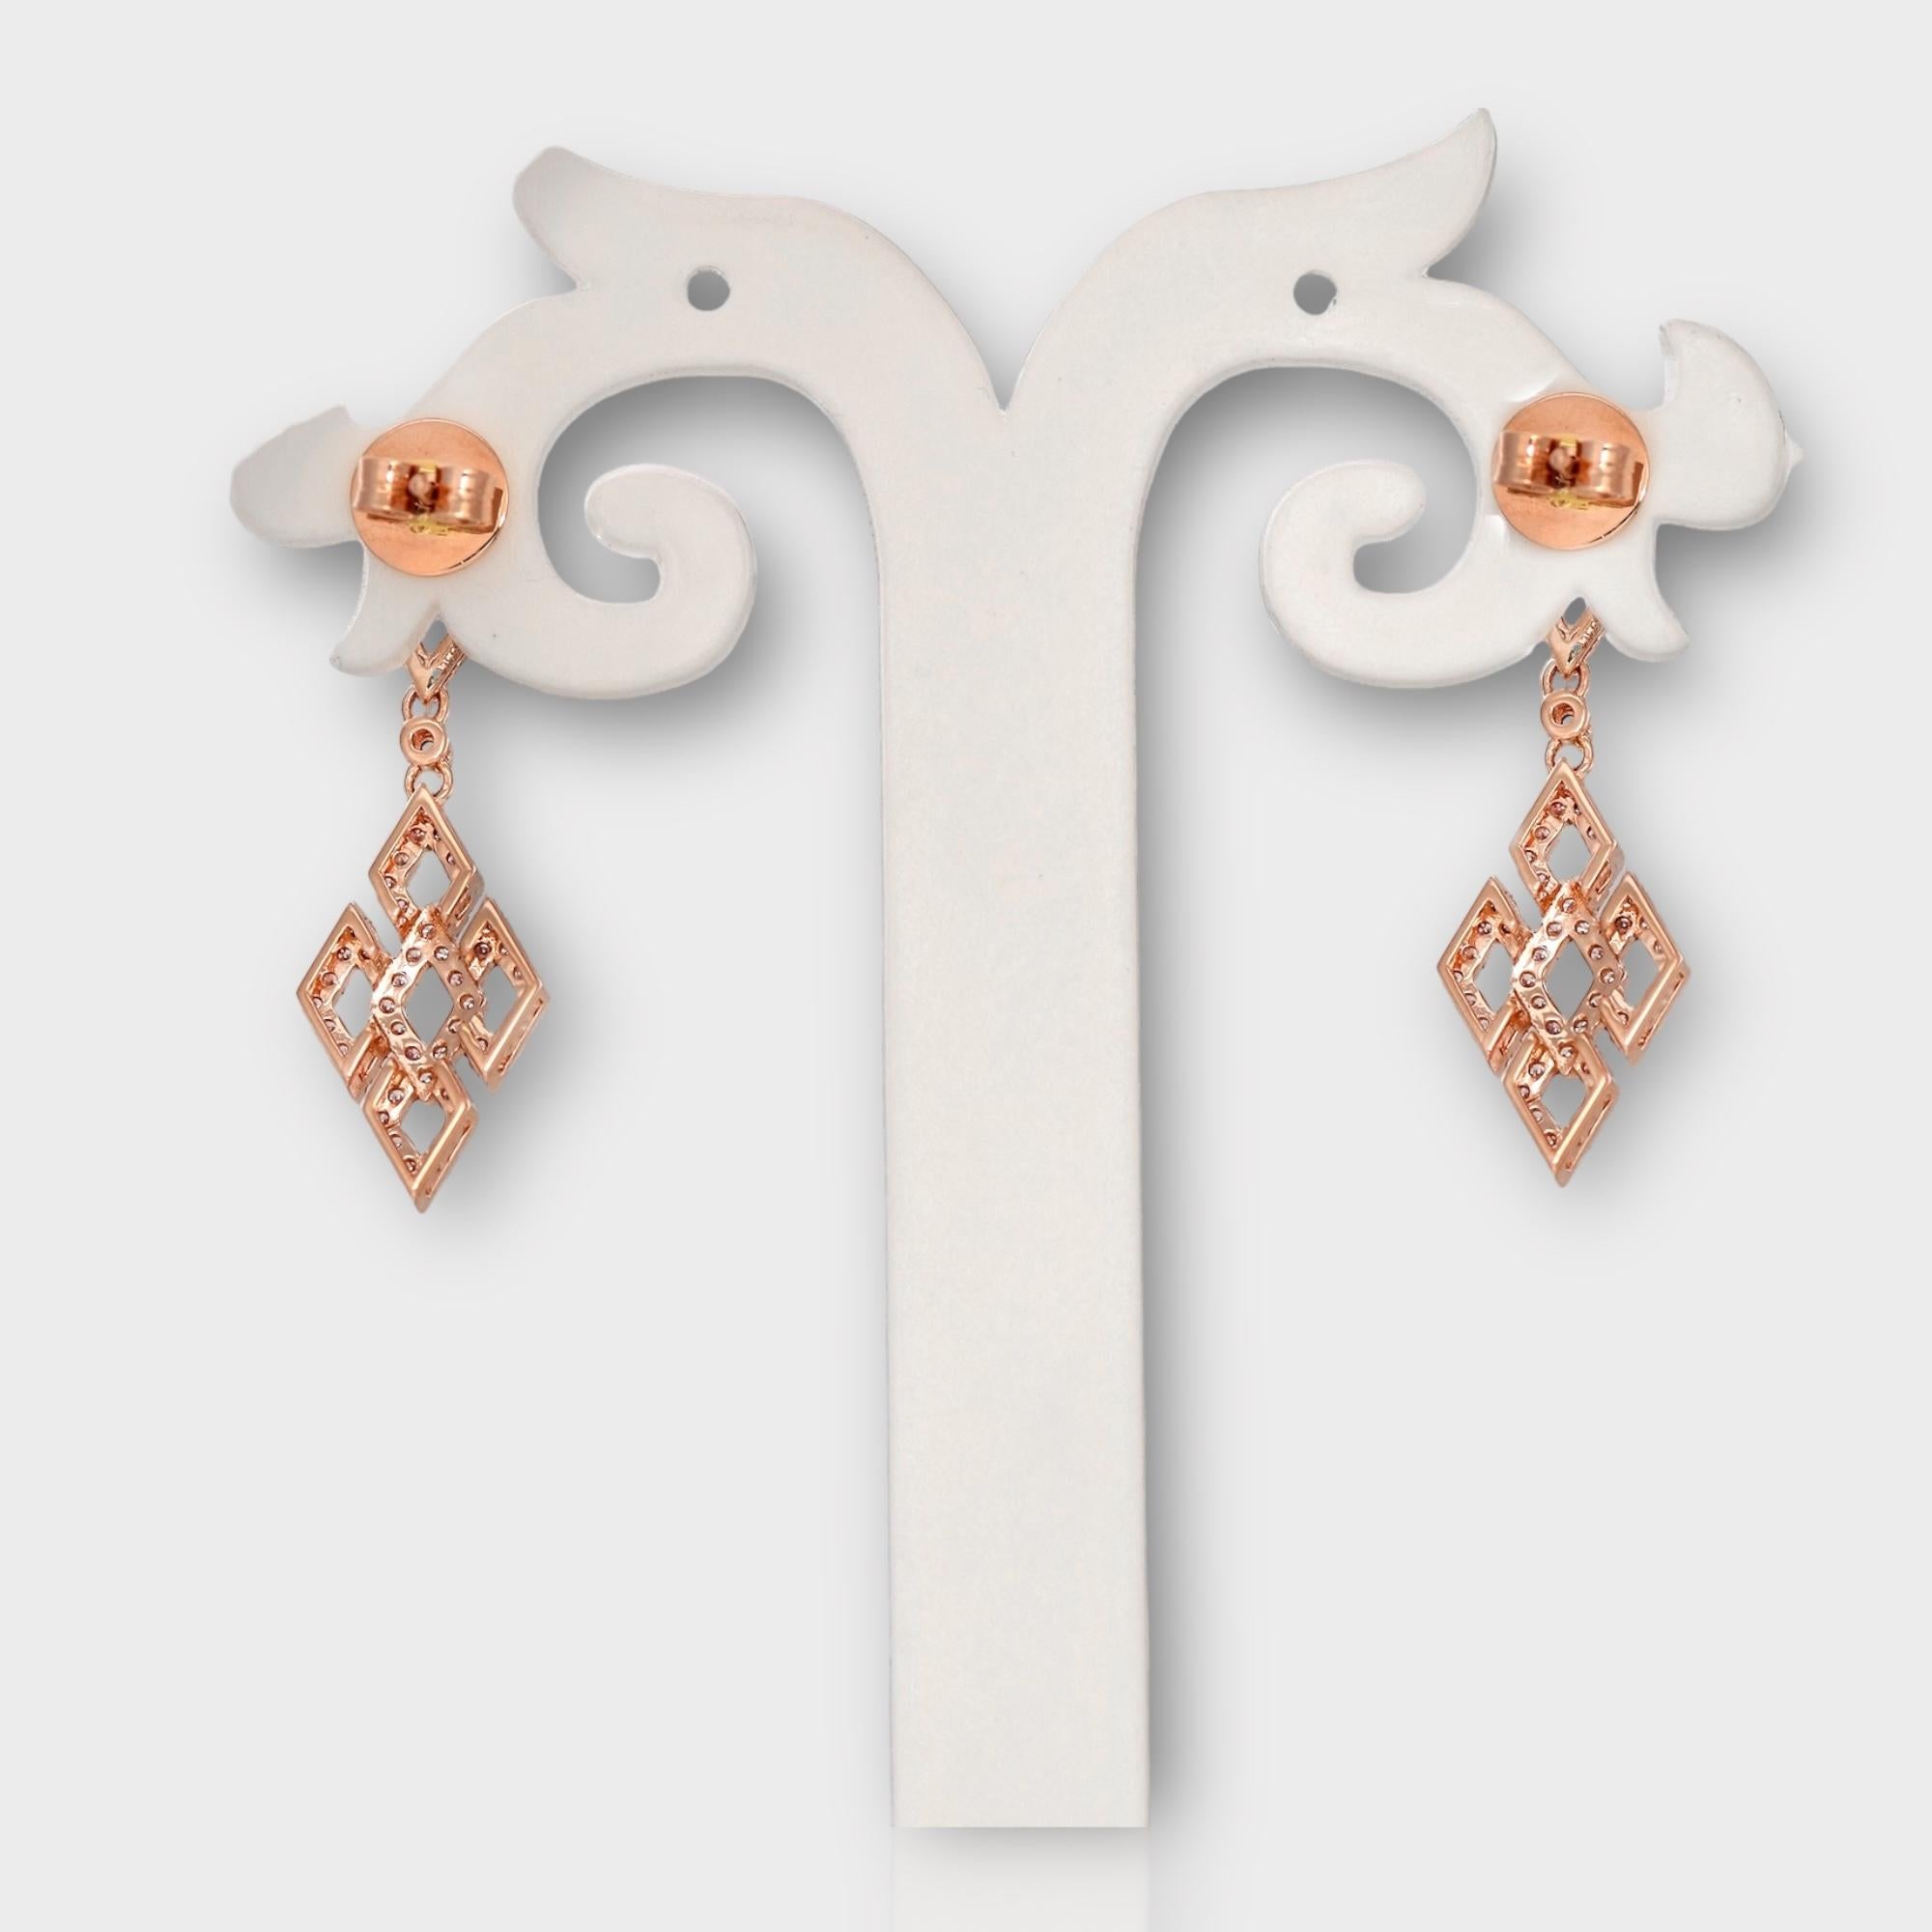 IGI 14K 0.95 ct Natural Pink Diamonds Art Deco Design Stud Earrings For Sale 2